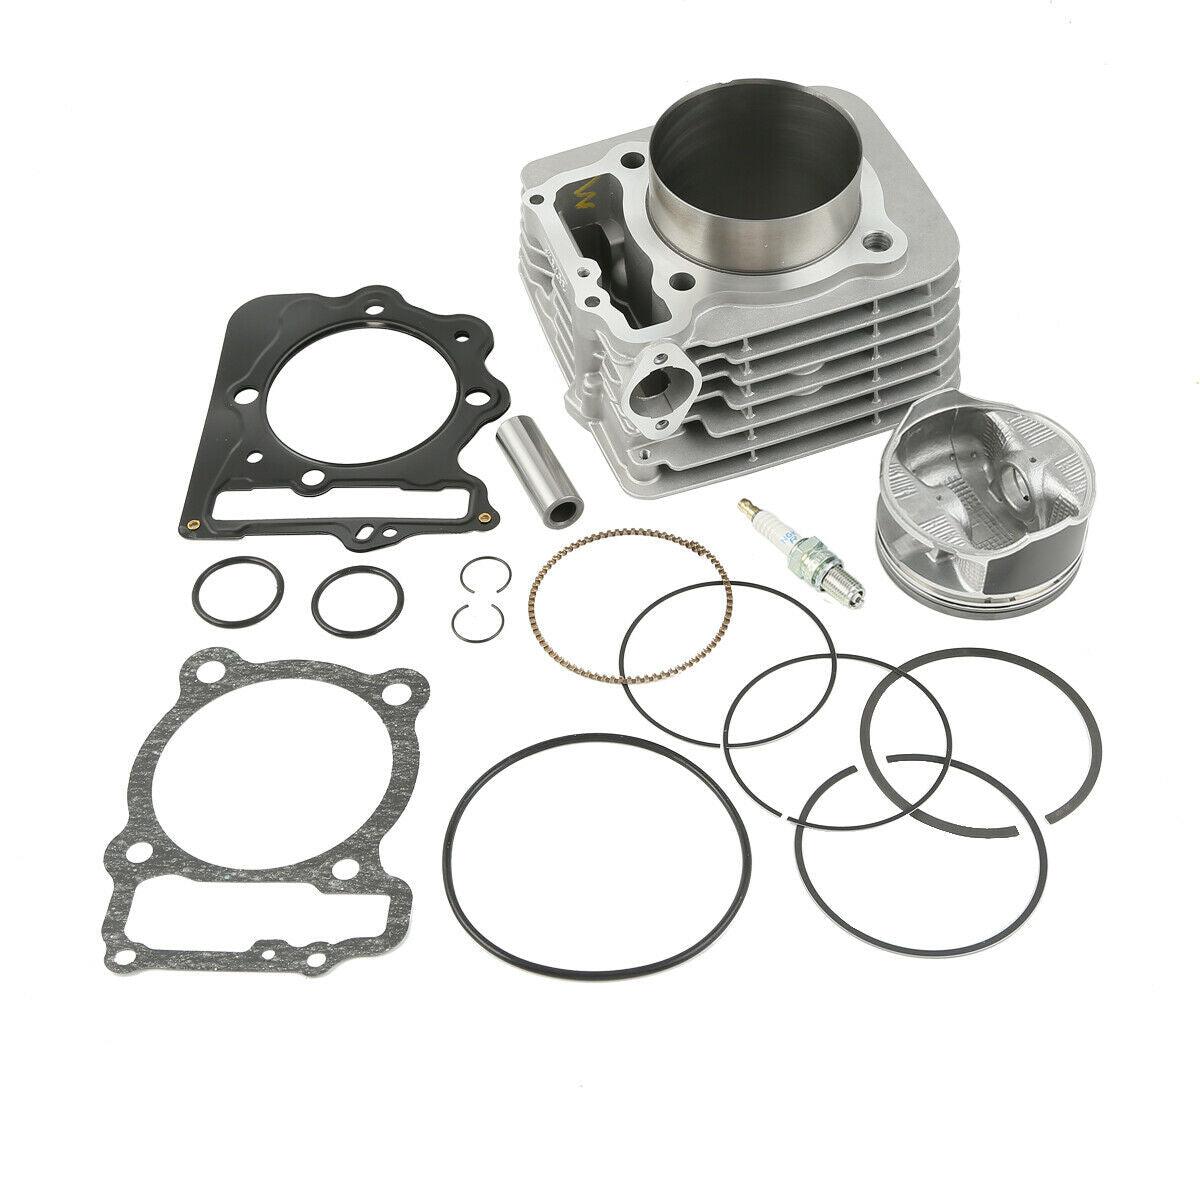 440cc Big Bore Cylinder Piston Gasket Kit Fit For Honda Sportrax TRX400EX 99-08 - Moto Life Products